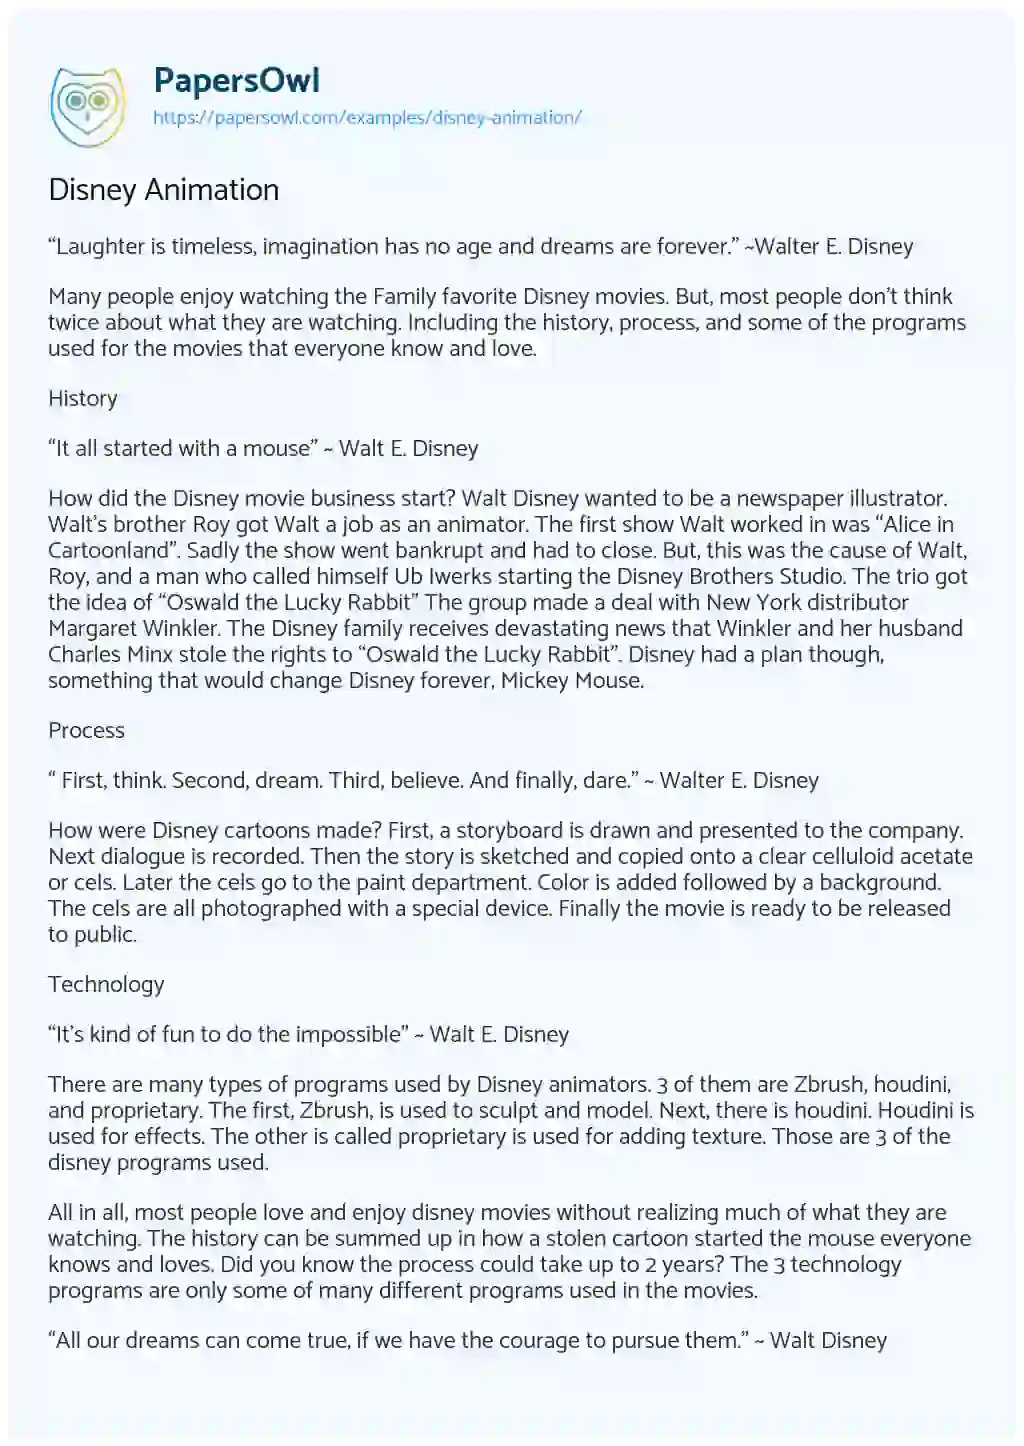 Disney Animation - Free Essay Example - 405 Words 